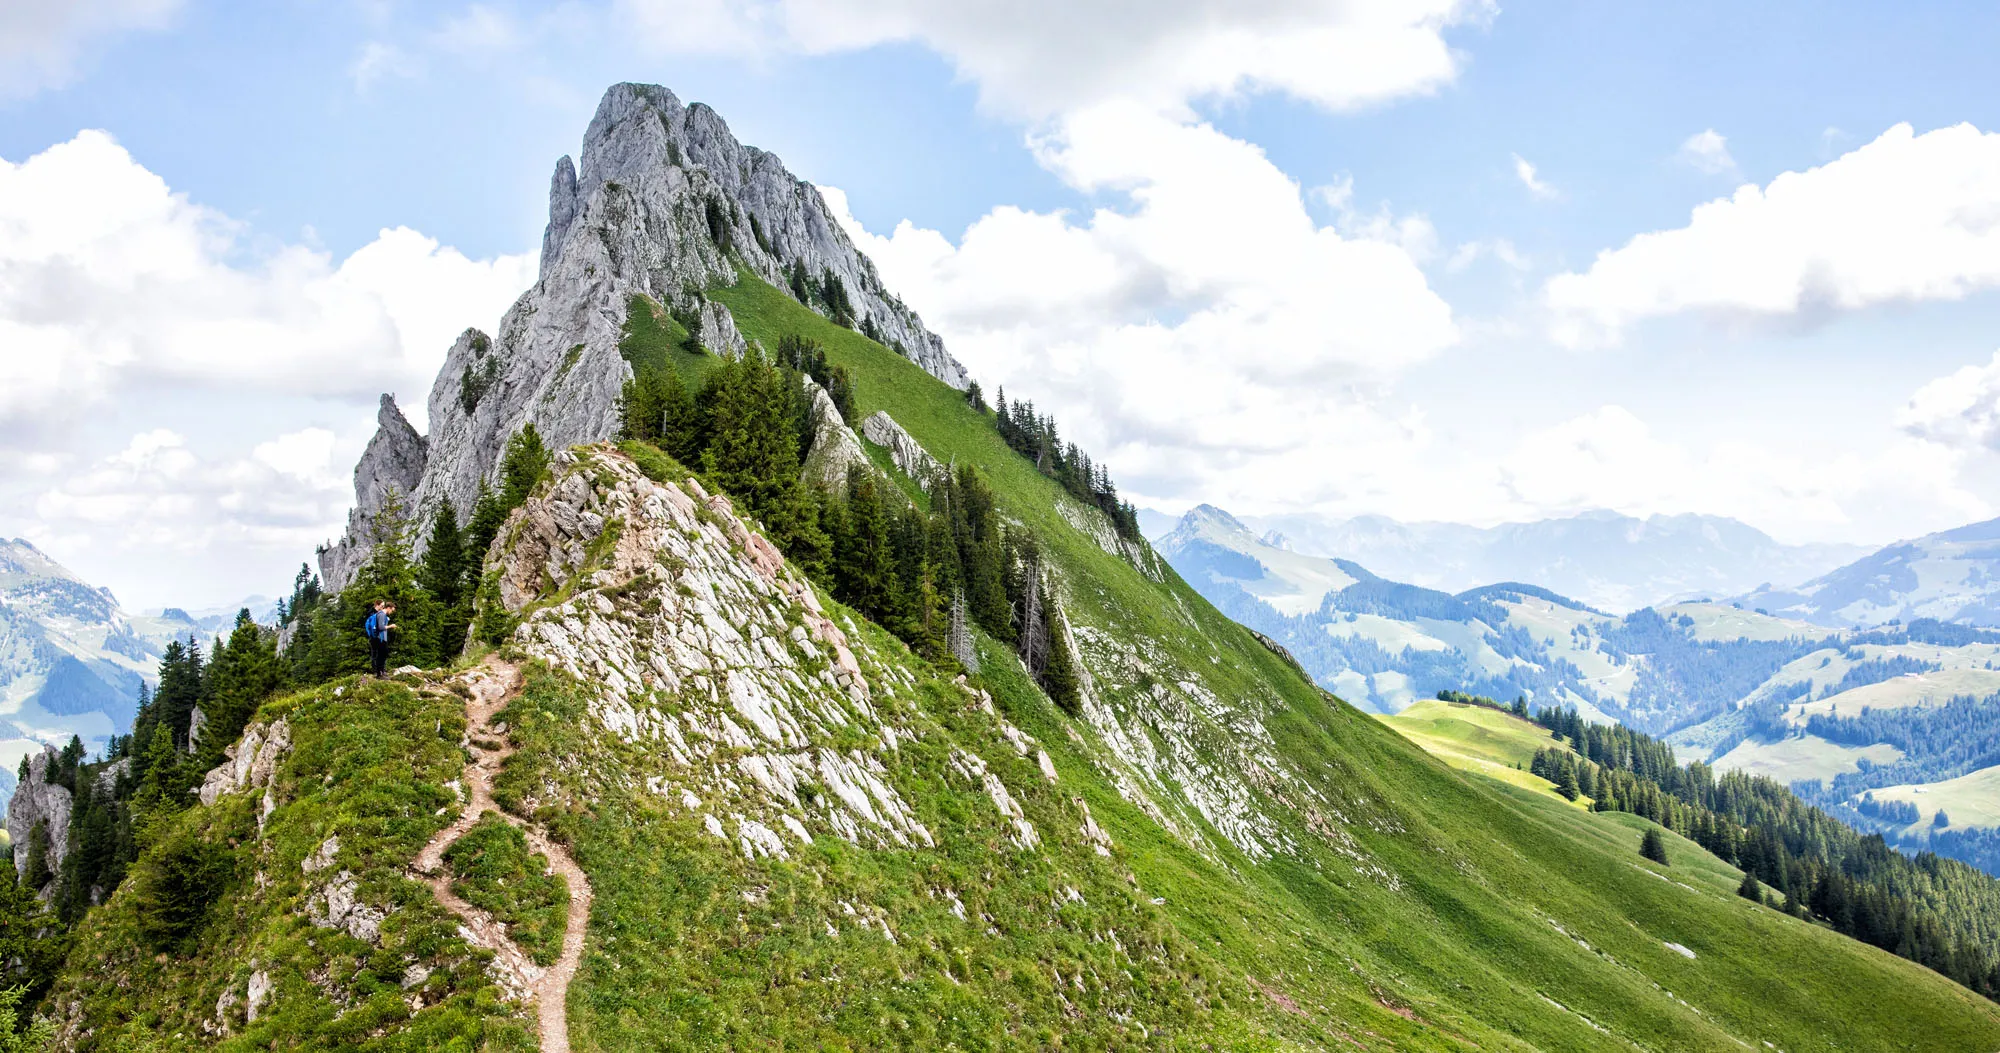 Featured image for “Hiking the Gastlosen Tour in Switzerland”